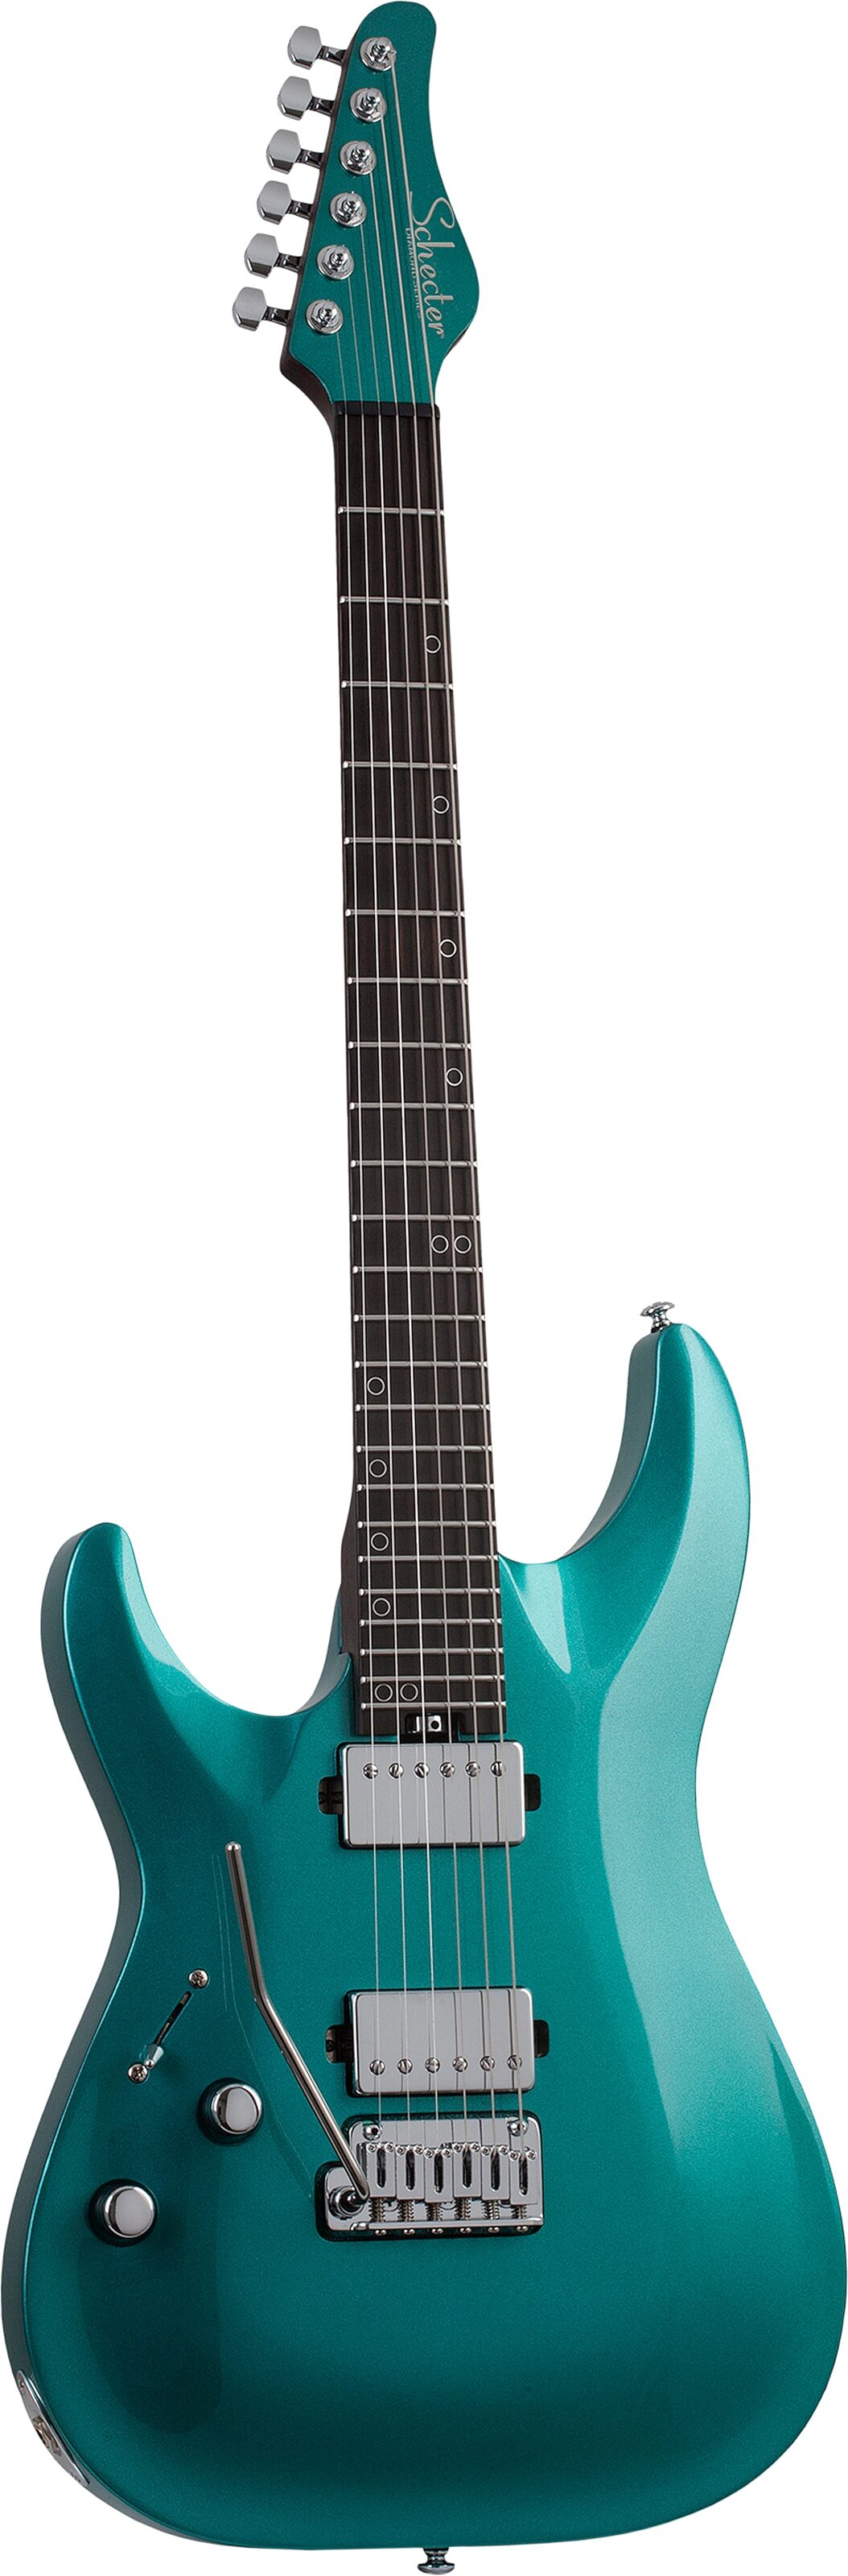 Schecter Aaron Marshall AM-6 Tremolo Electric Guitar, Left-Handed